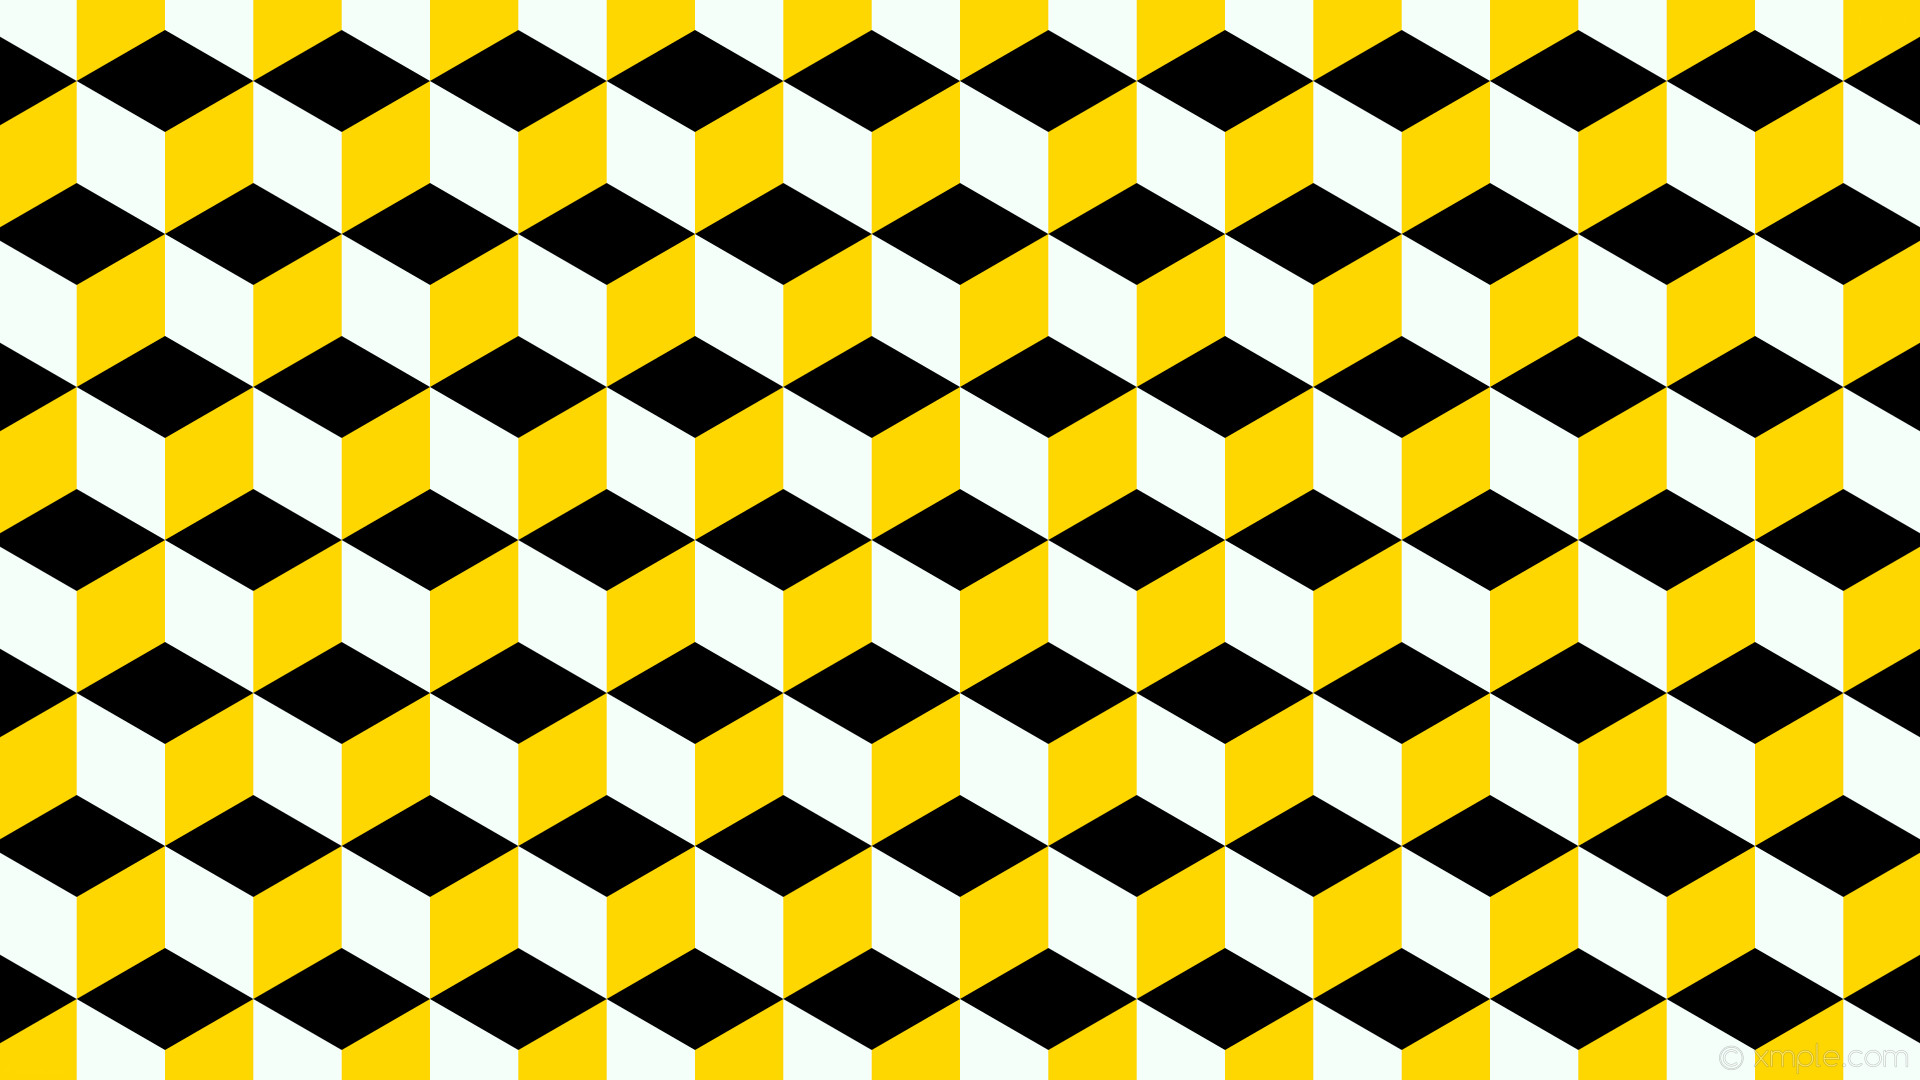 1920x1080 wallpaper yellow 3d cubes white black mint cream gold #000000 #f5fffa  #ffd700 0